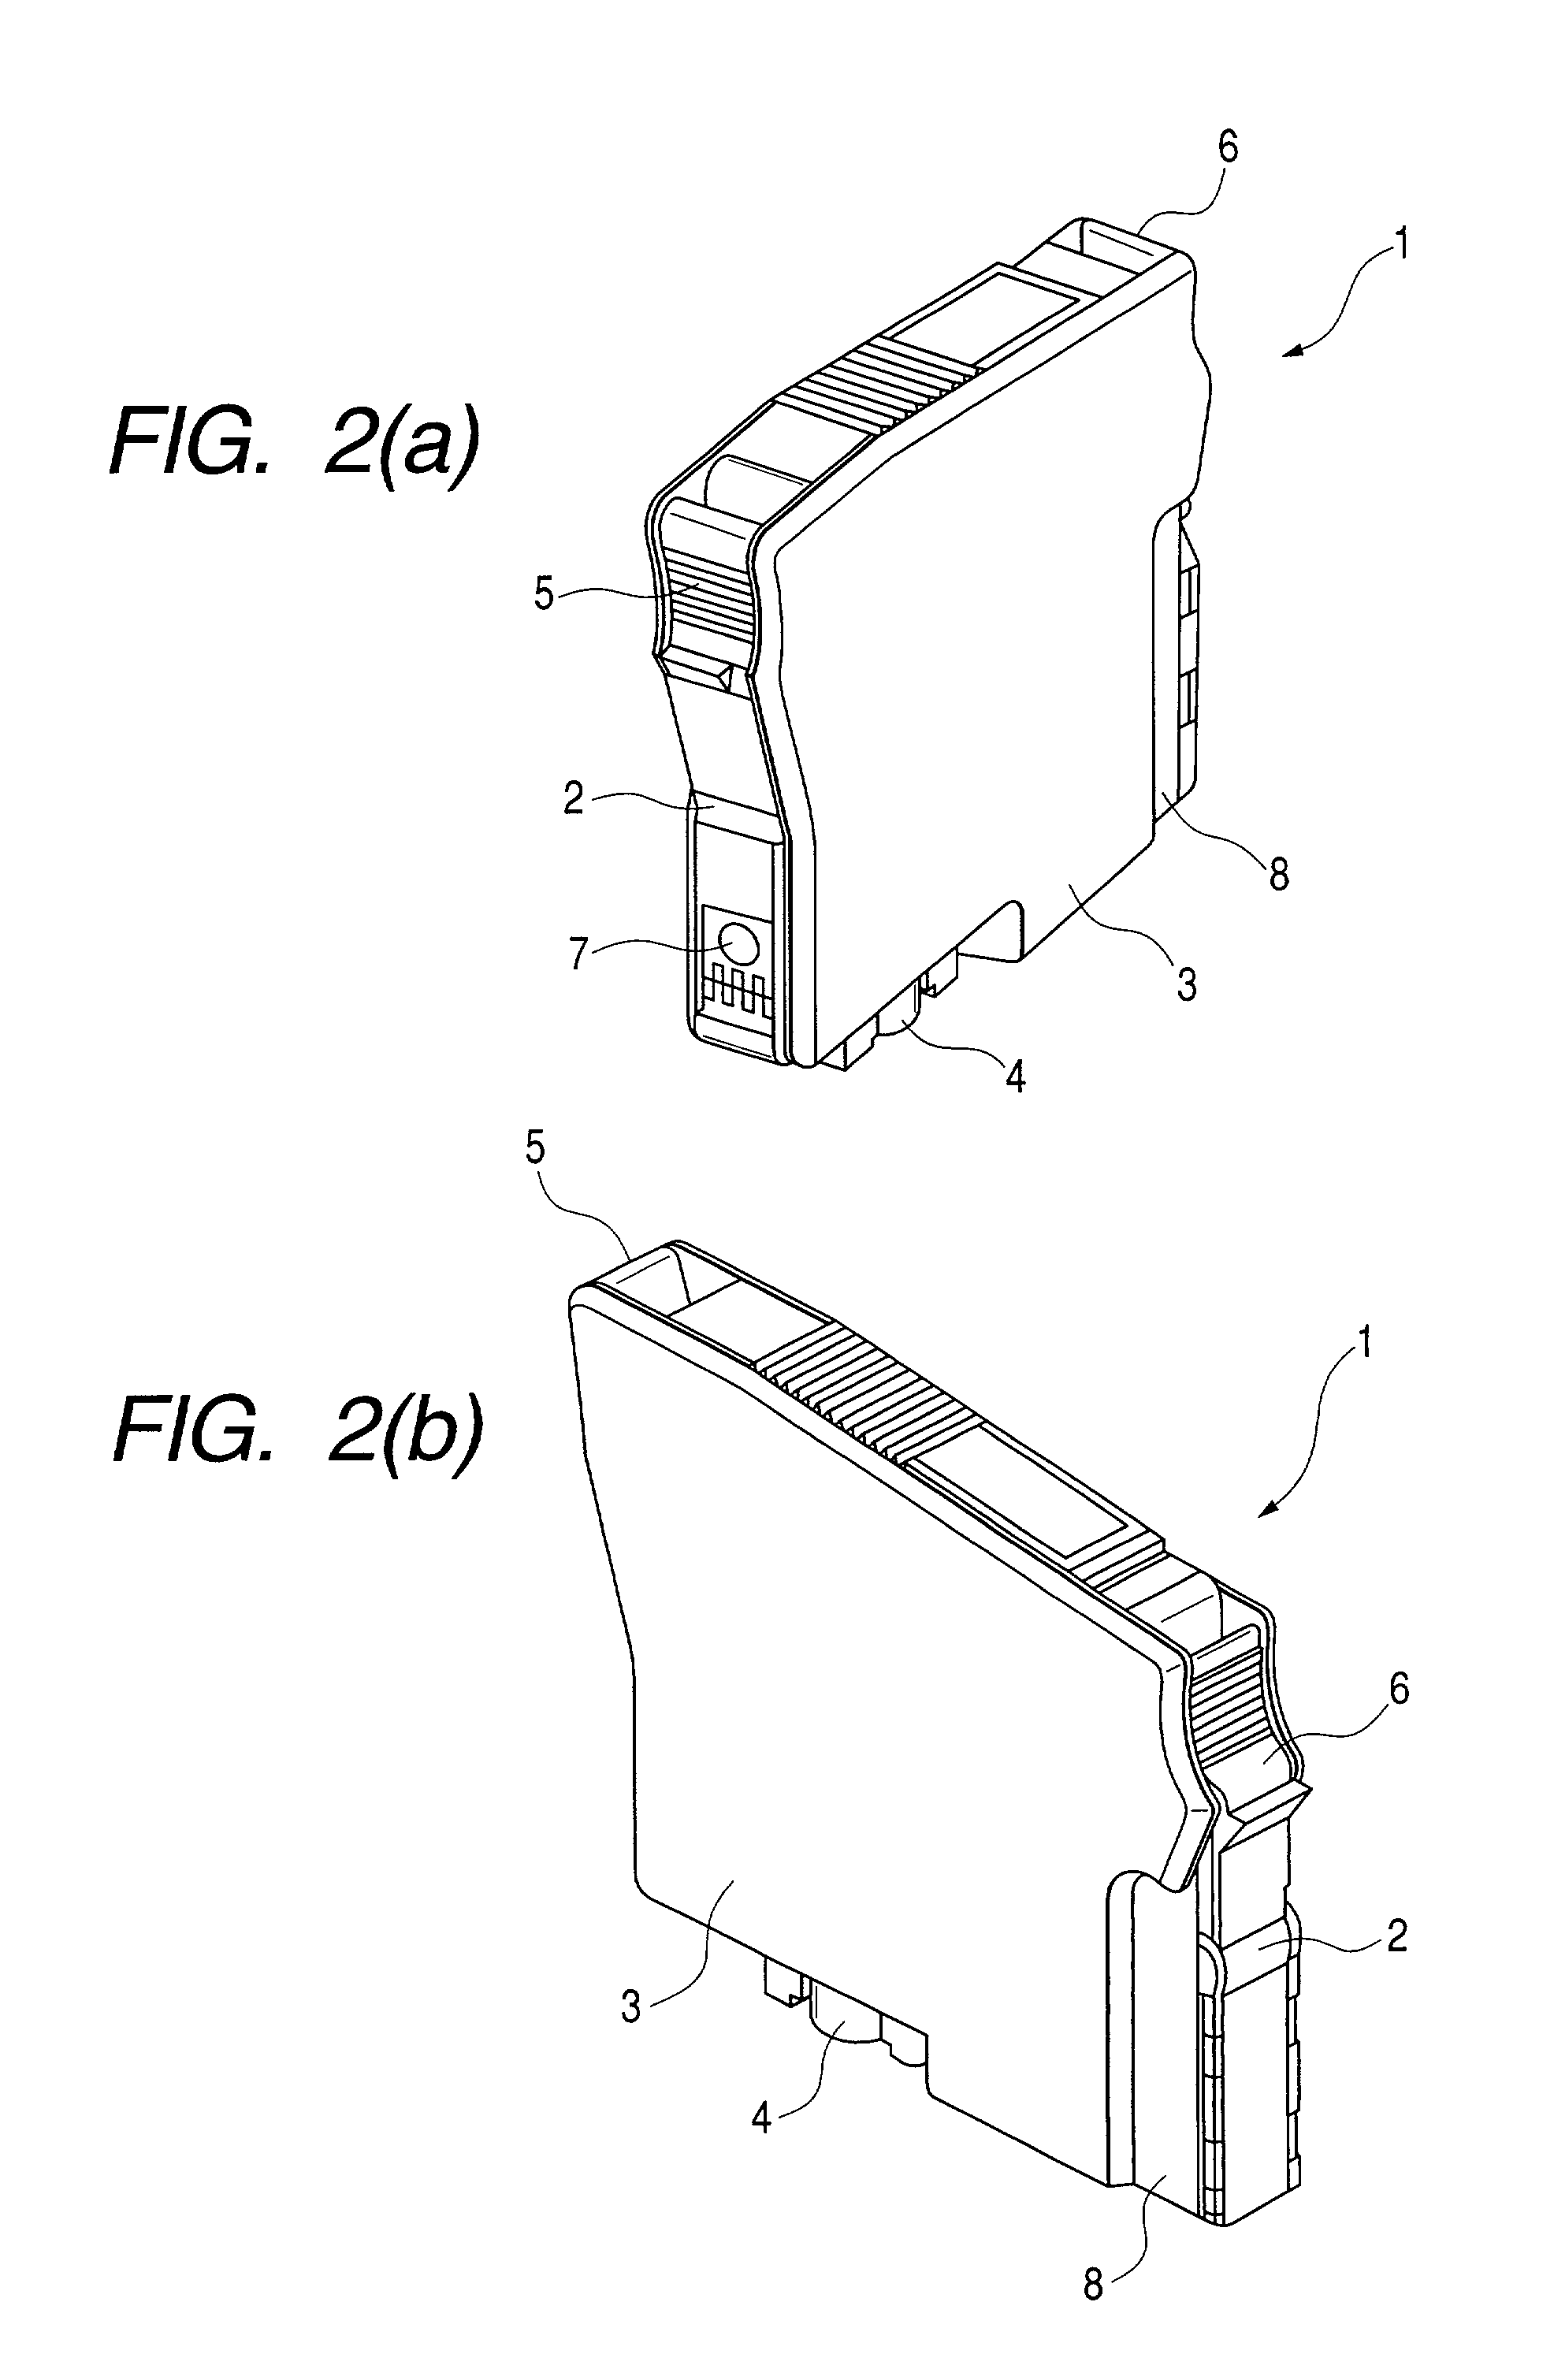 Ink cartridge and assembling method of atmospheric open valve in ink cartridge